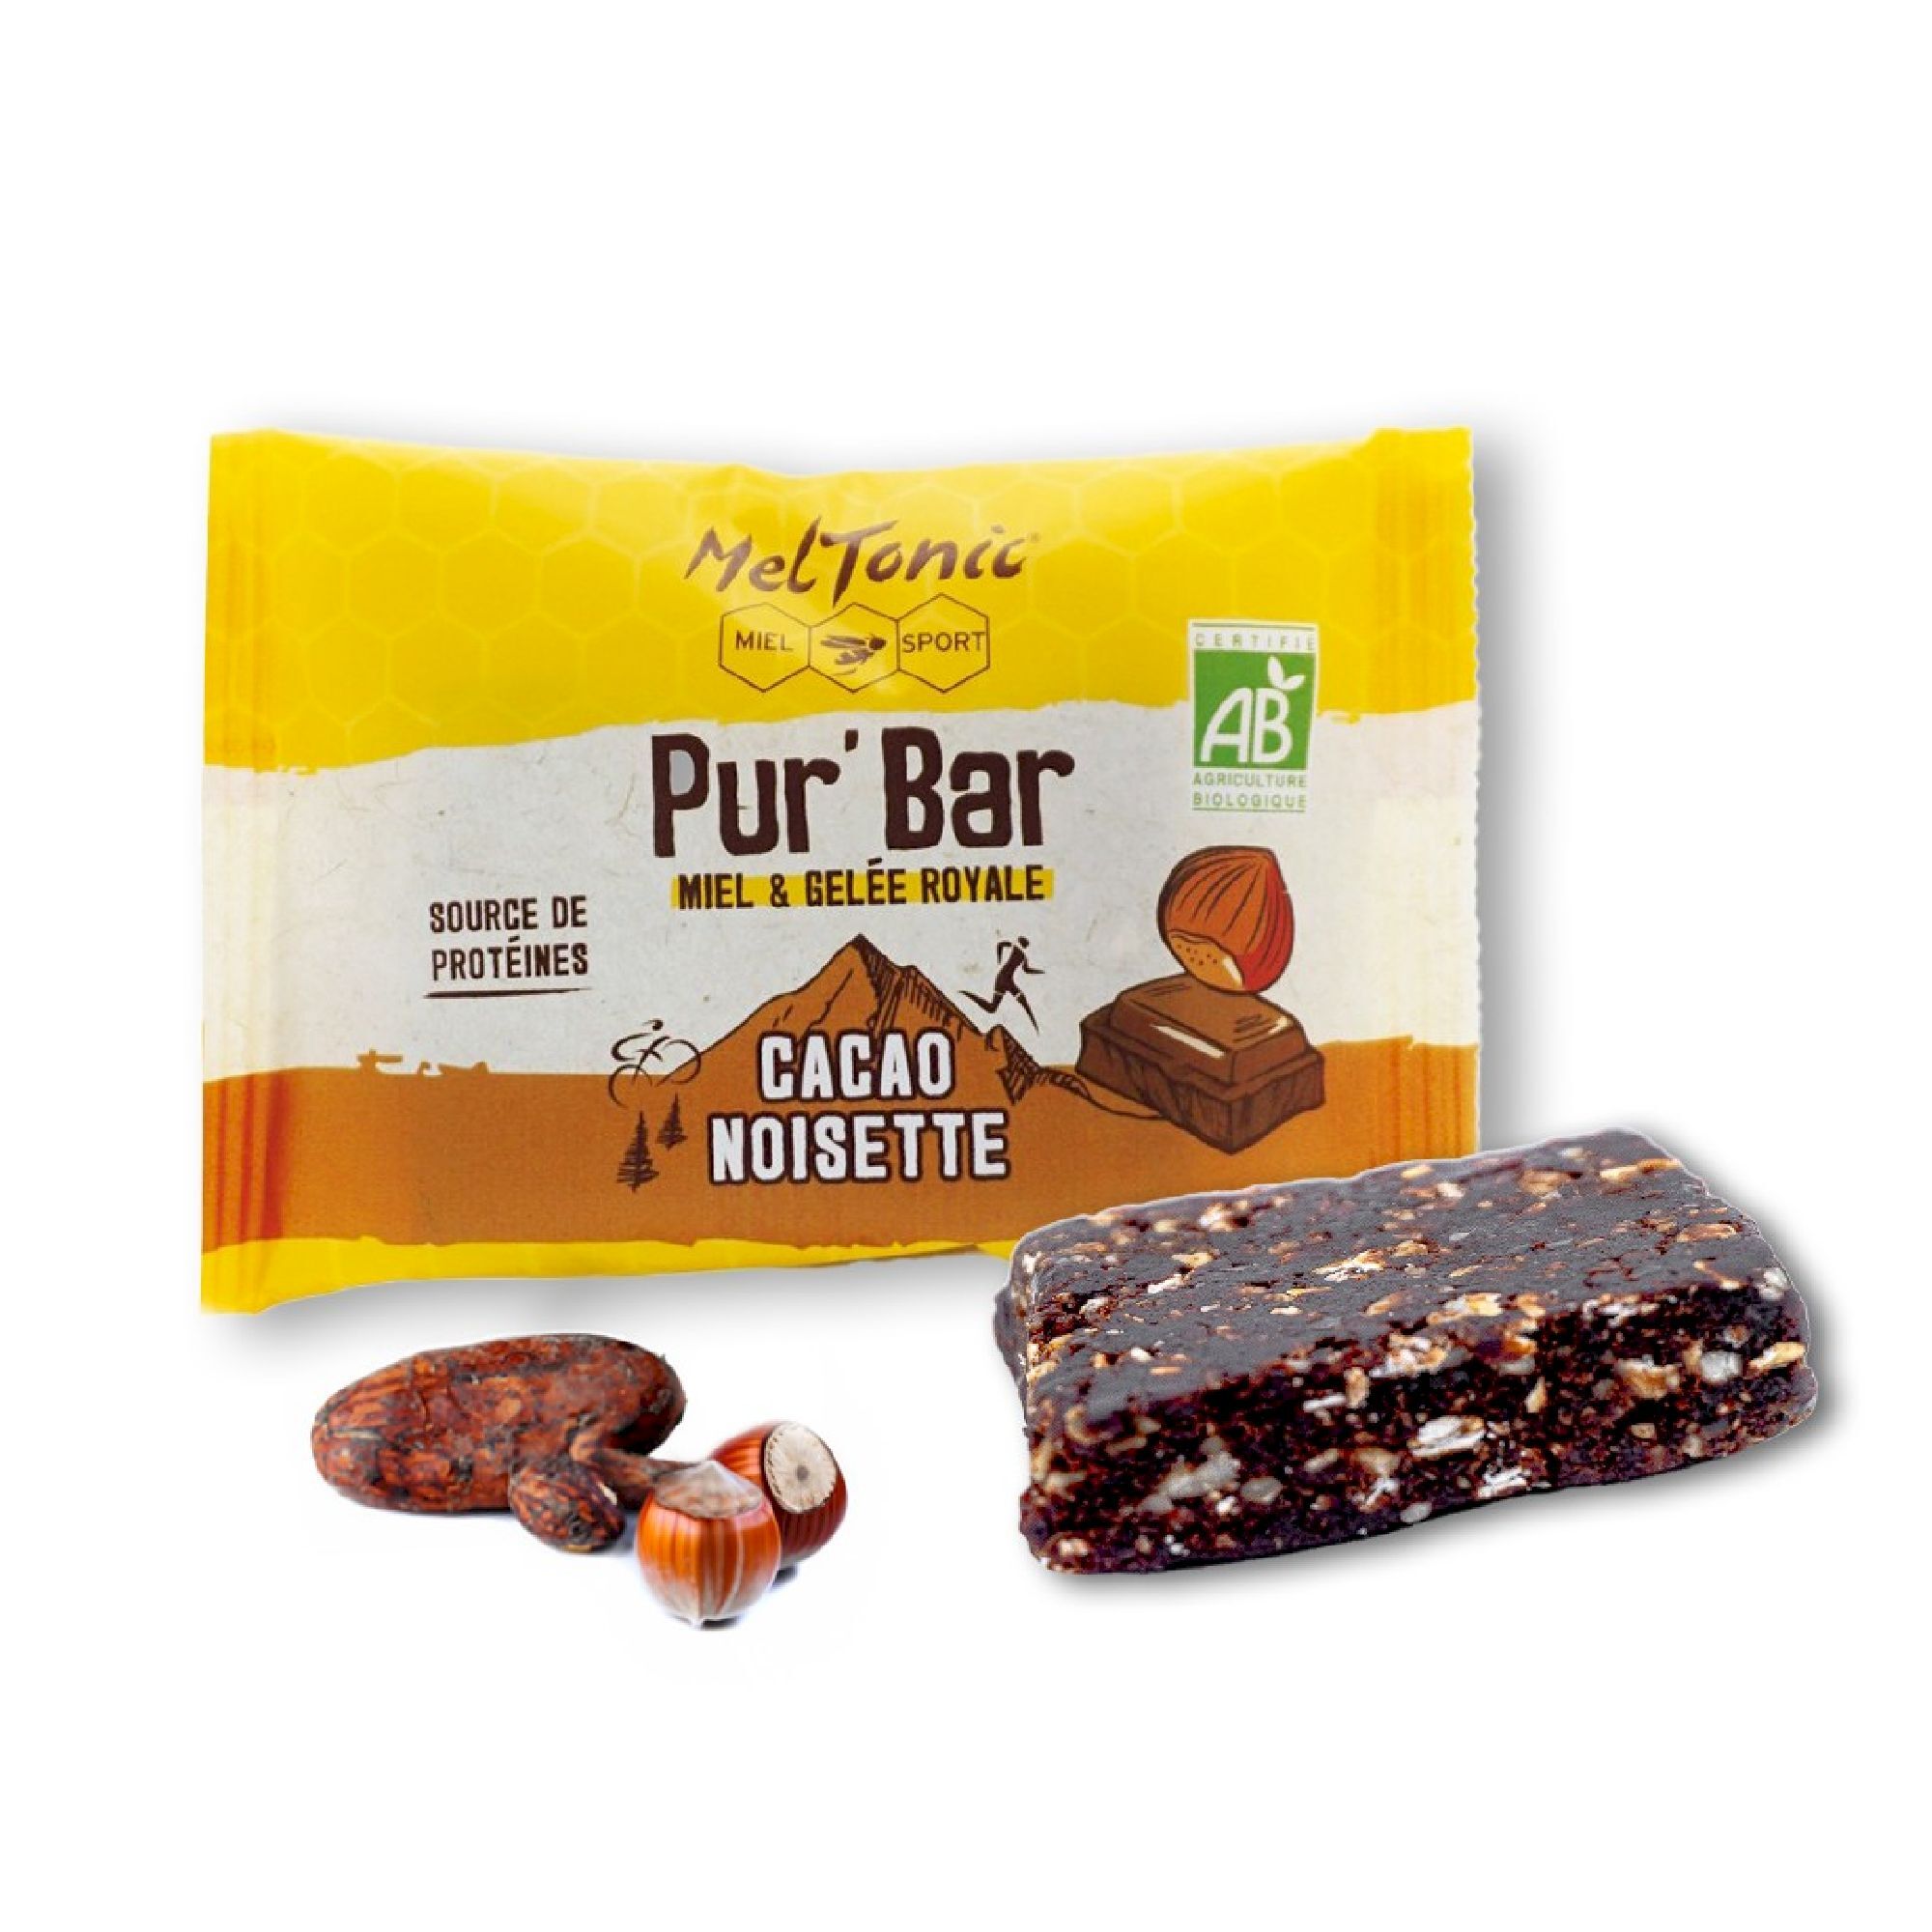 Meltonic Pur' Bar Bio Cacao Noisette Miel & Gelée Royale - Energy bar | Hardloop